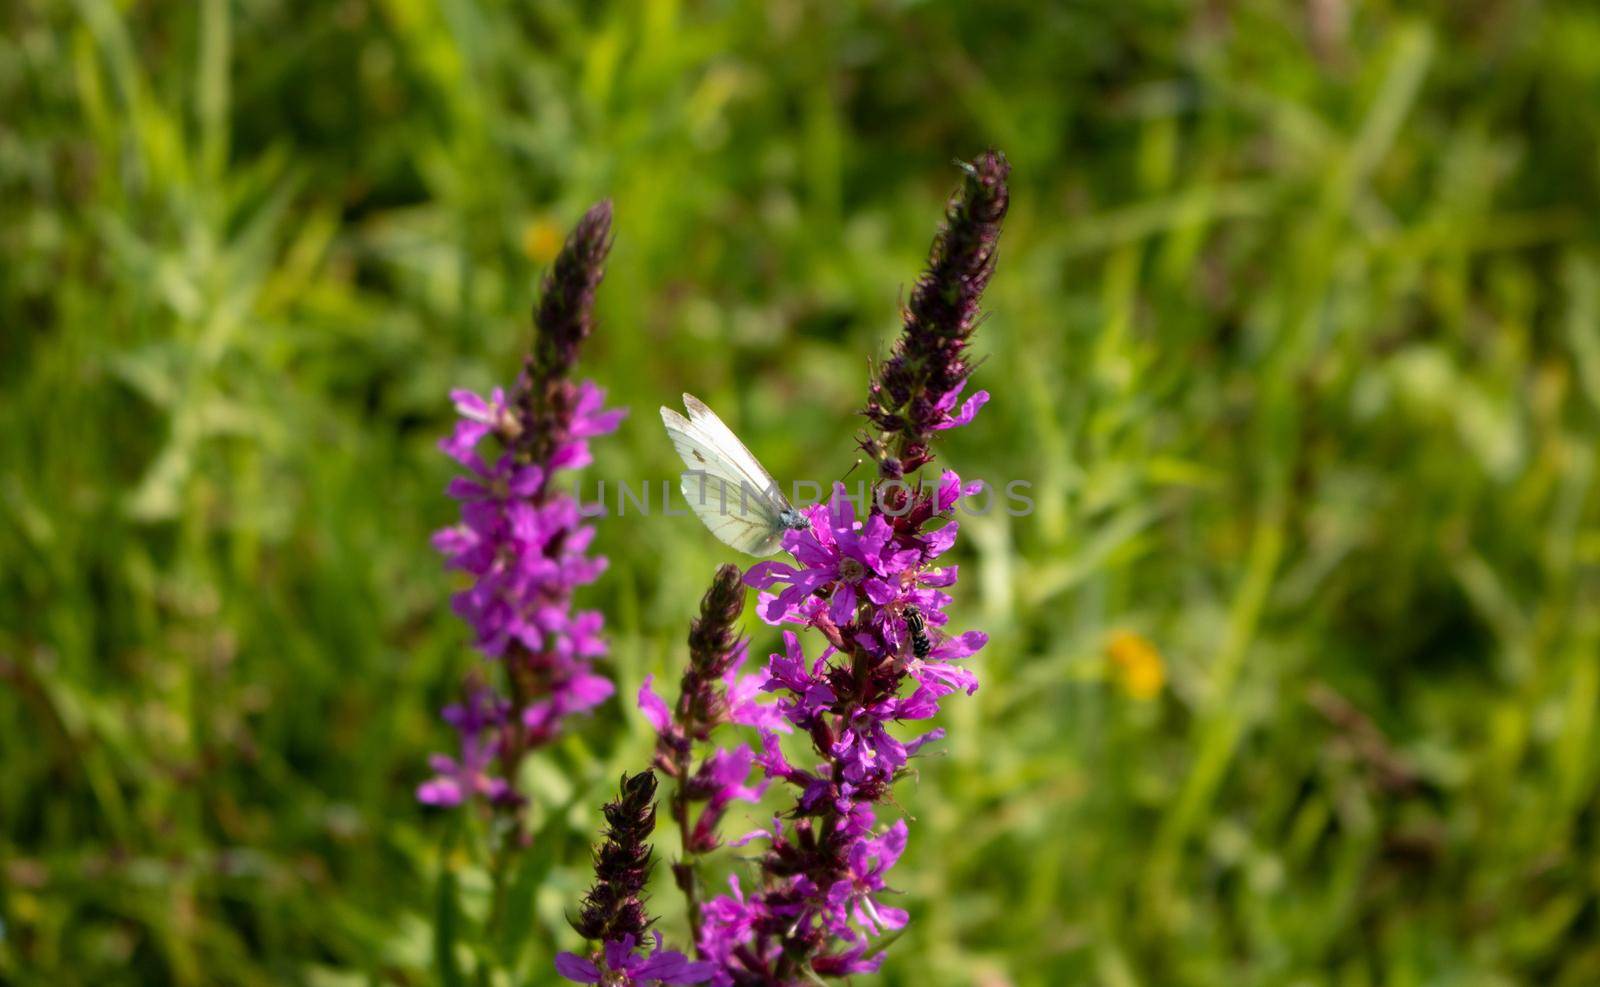 A white butterfly on a purple-lilac meadow flower by lapushka62